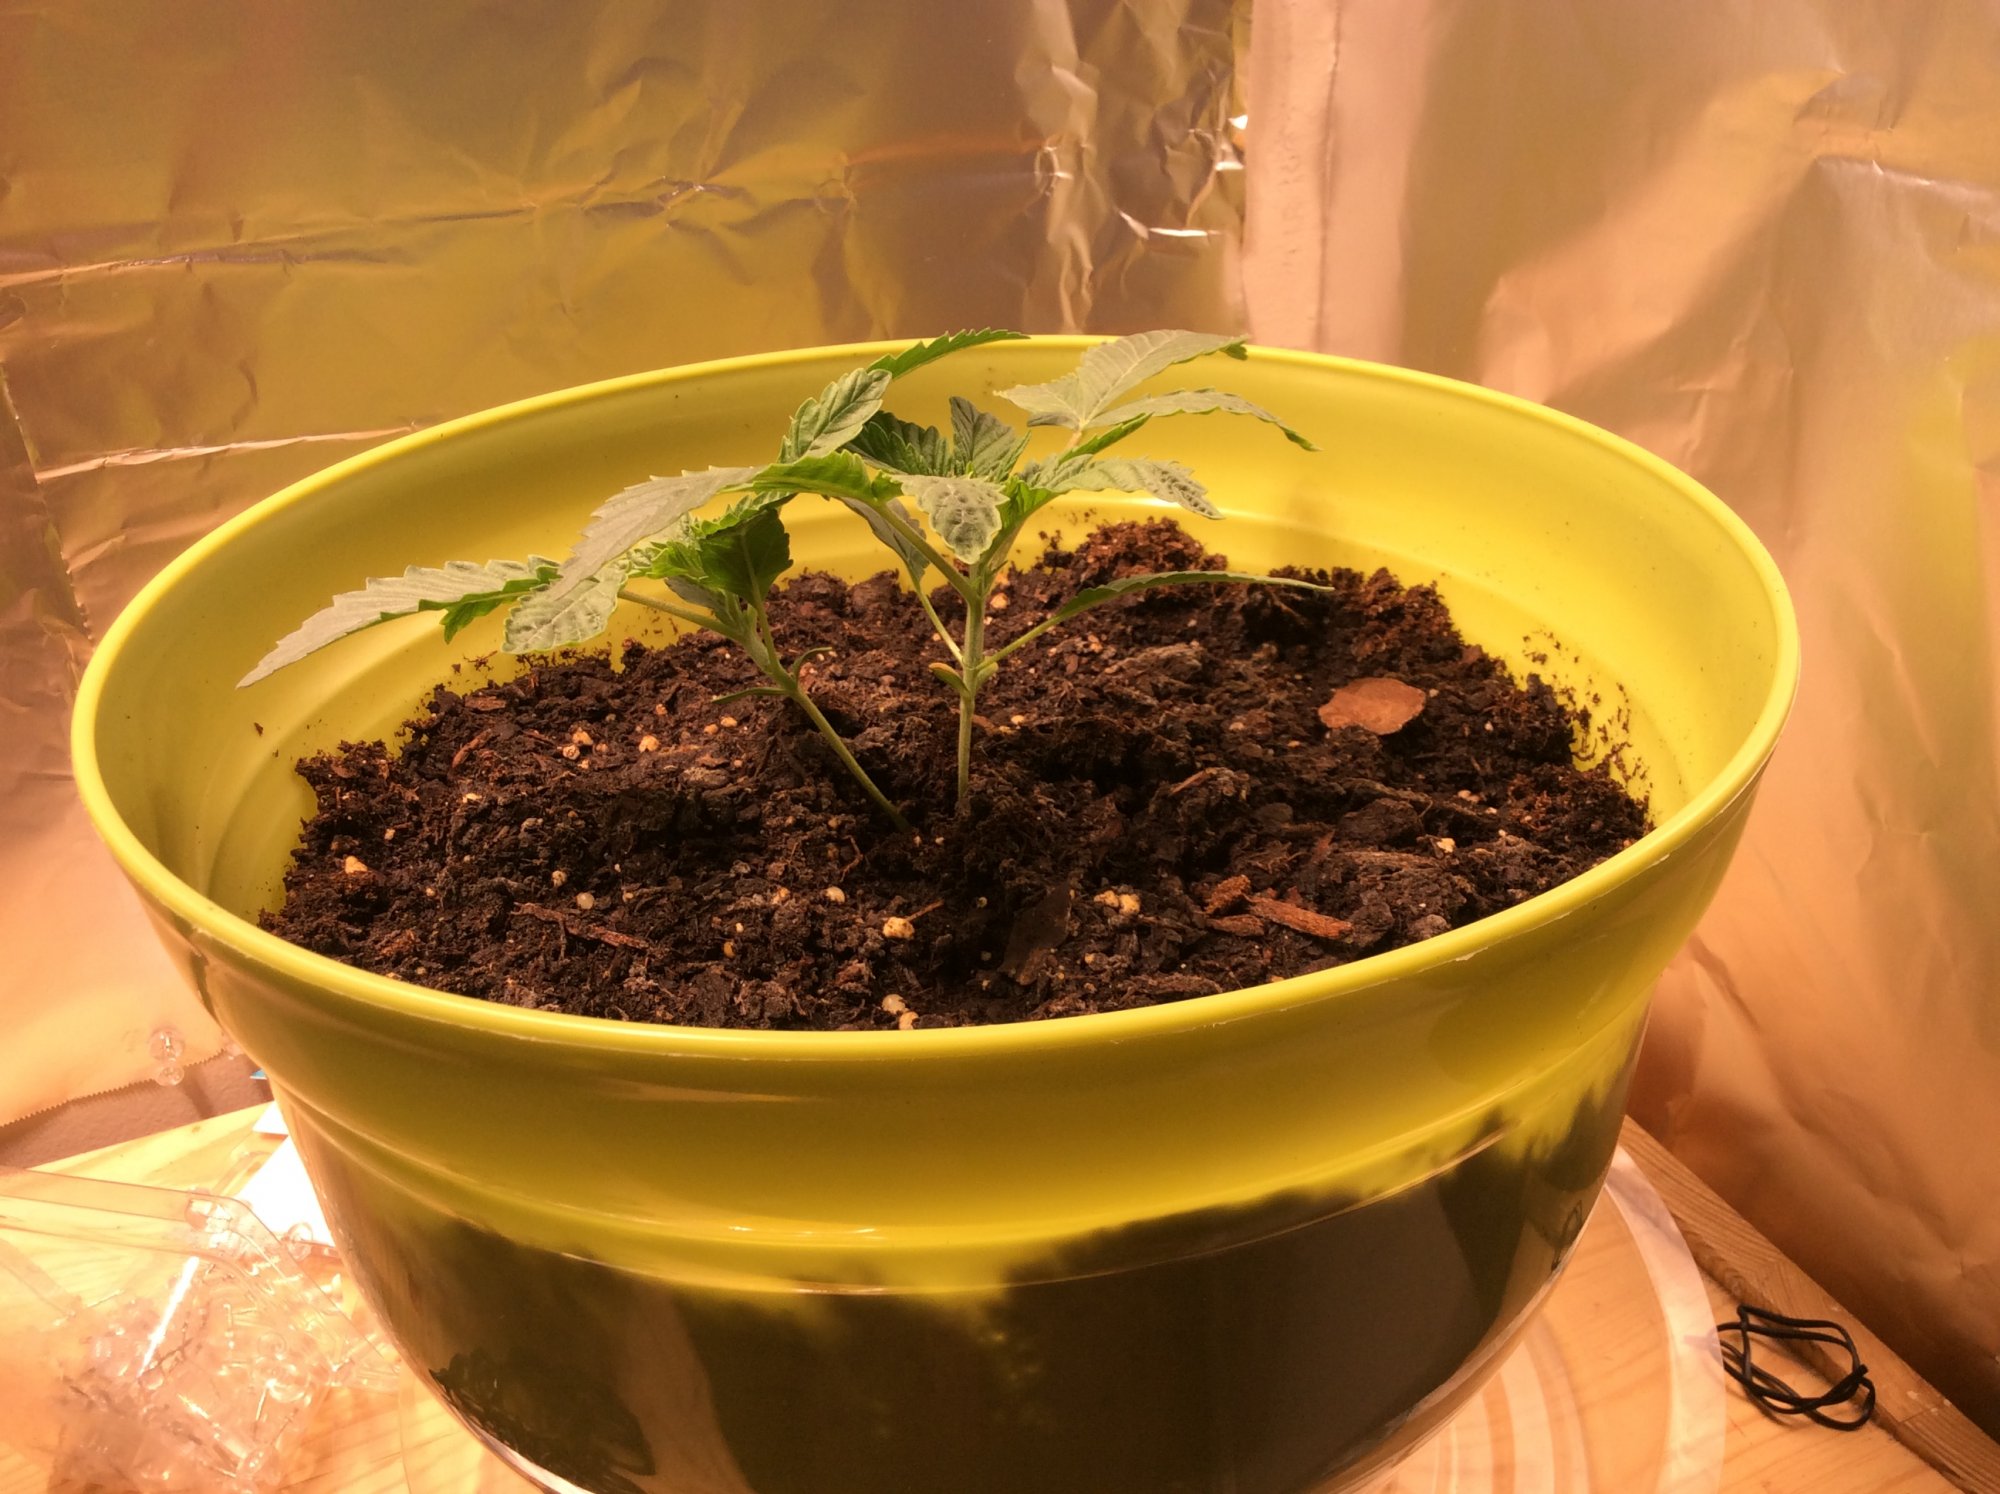 Two seedlings one pot